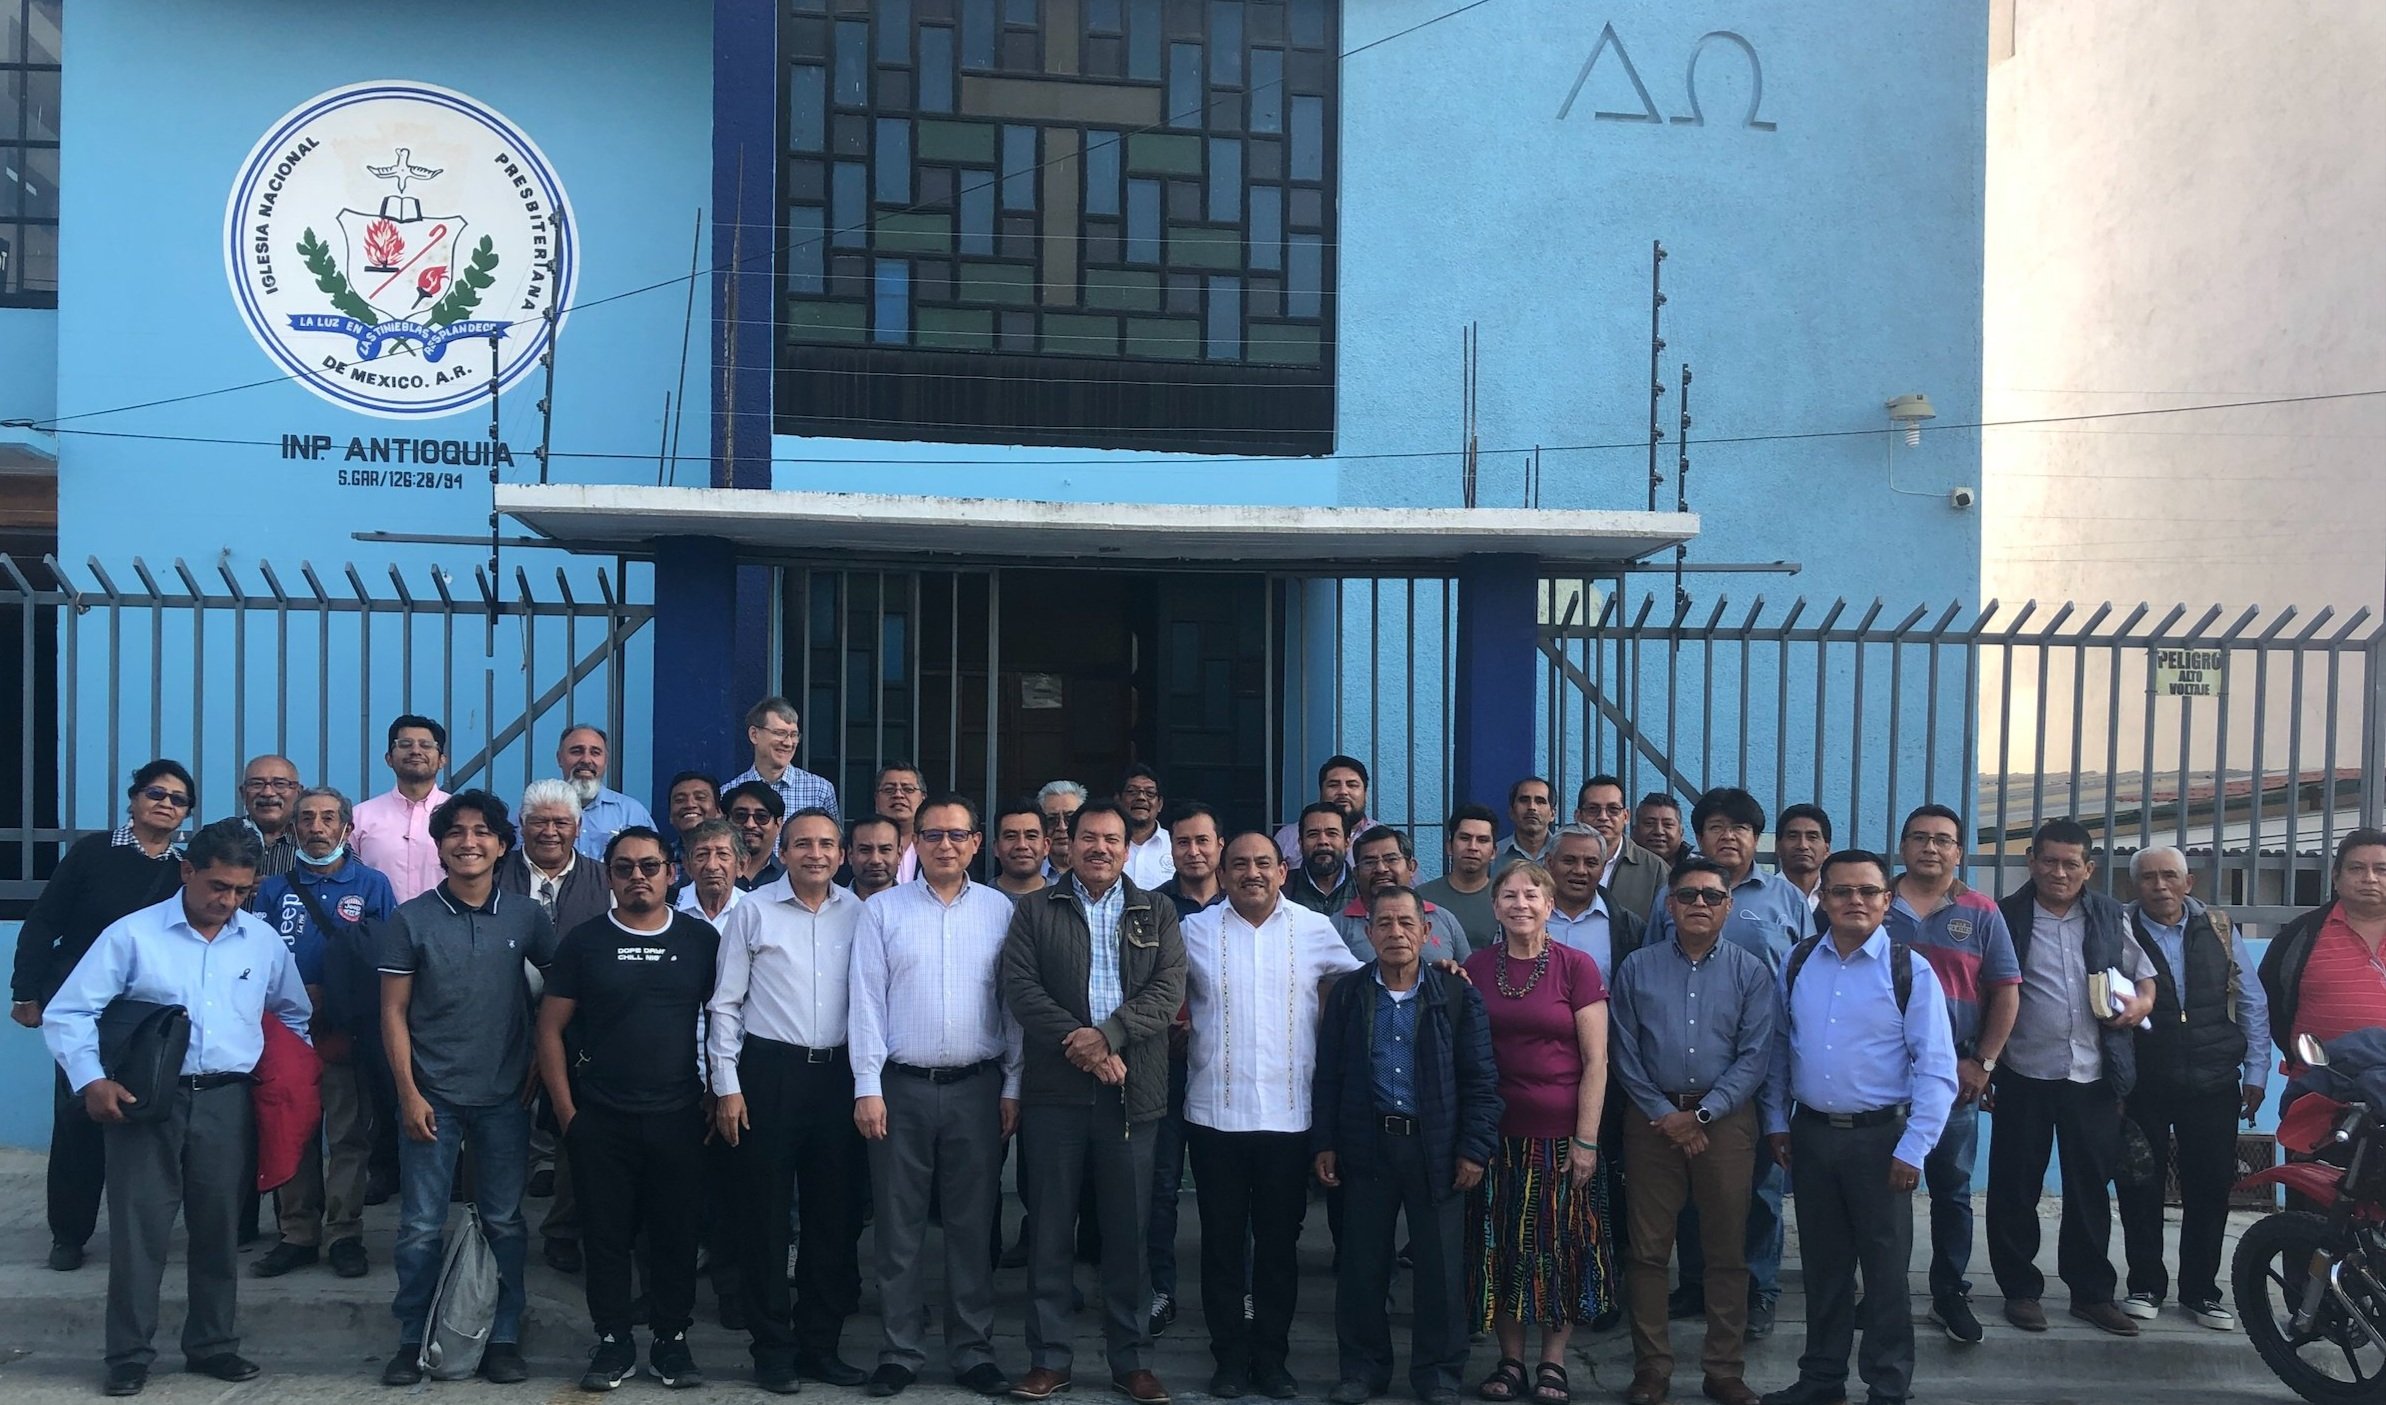   Some of the pastors, elders and deacons attending a leadership development seminar in Oaxaca  